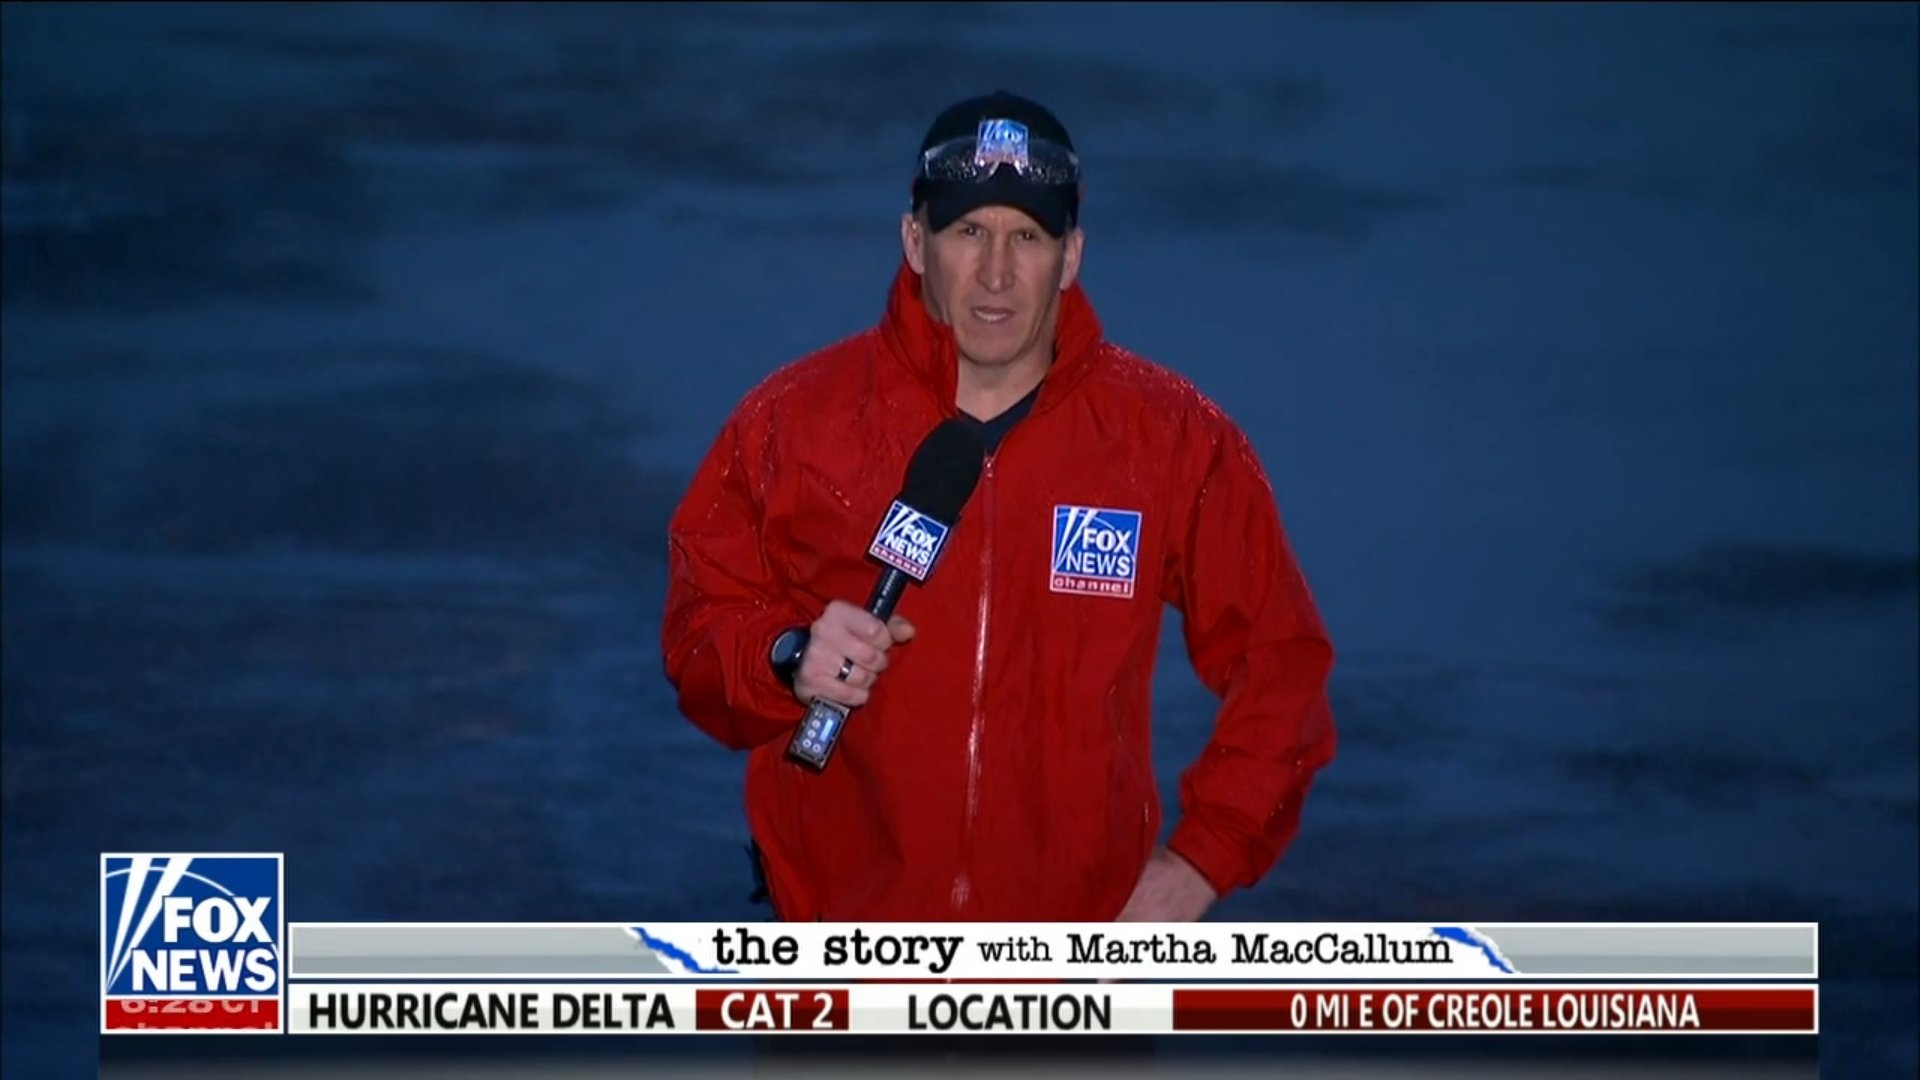 Mike Tobin Fox News Reporter